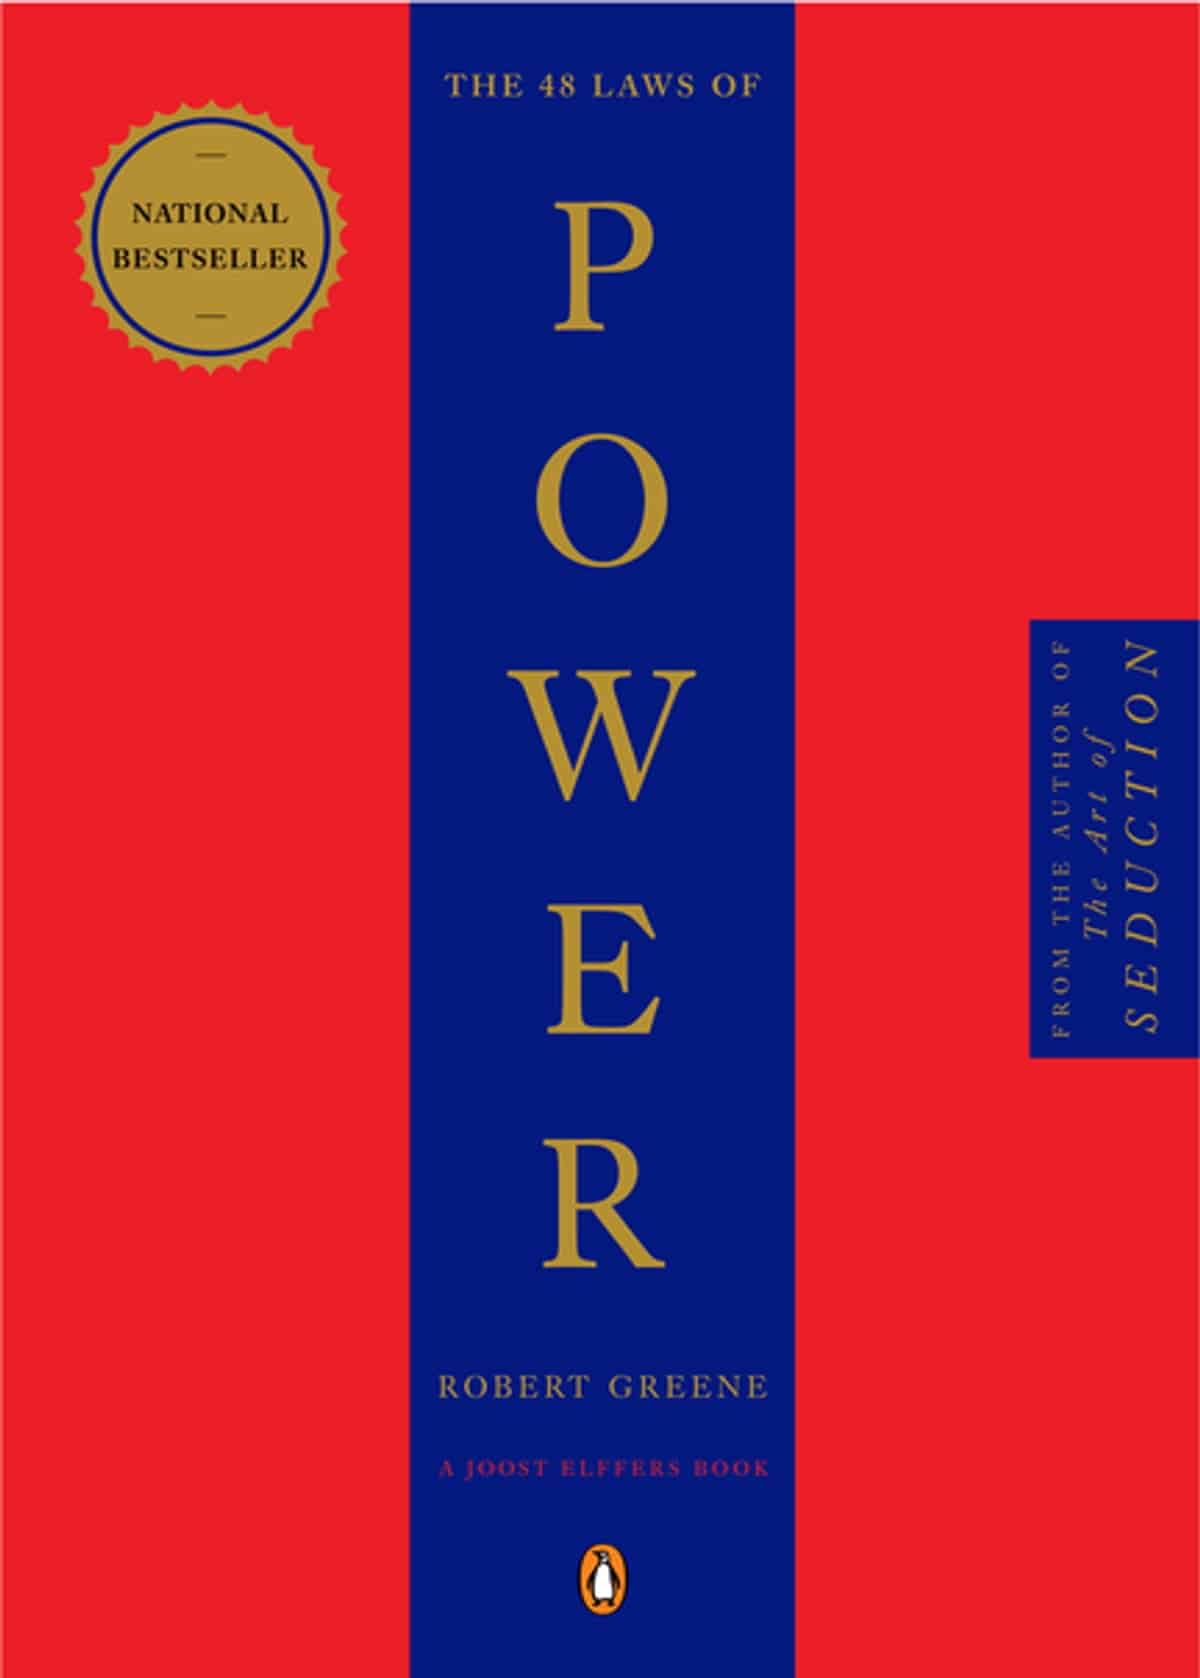 The 48 Laws of Power by Robert Greene & Joost Elffers